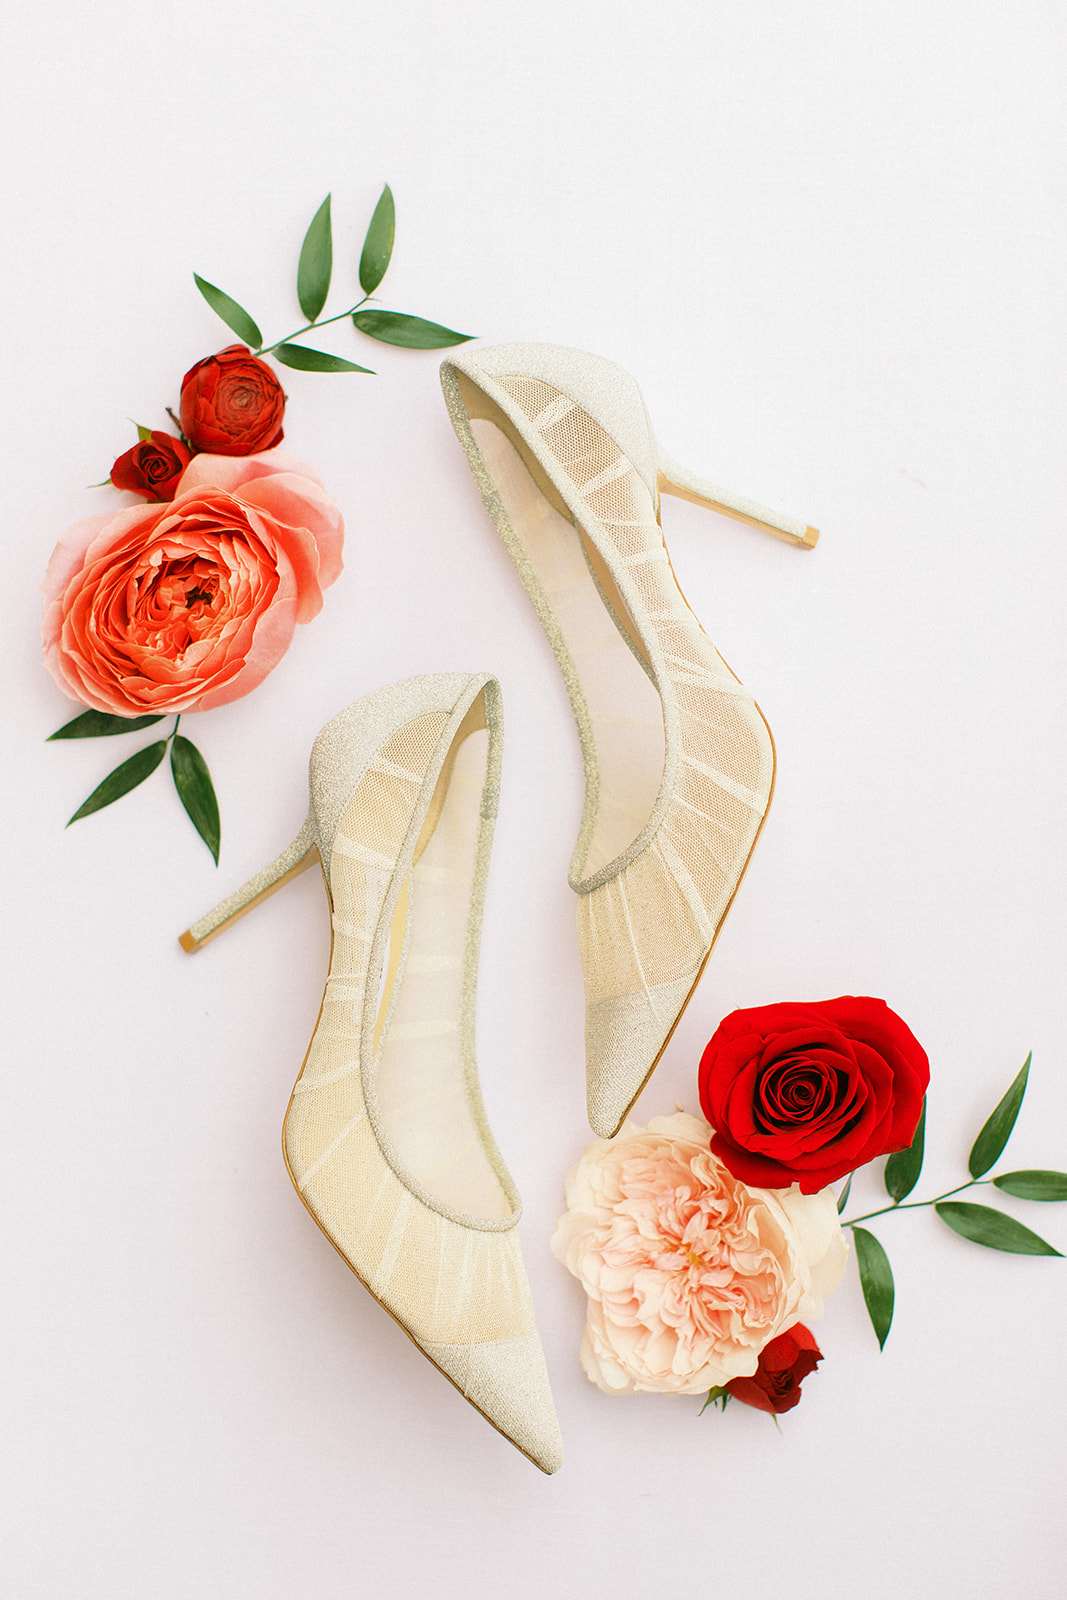 Bridal heels detail image with flowers.